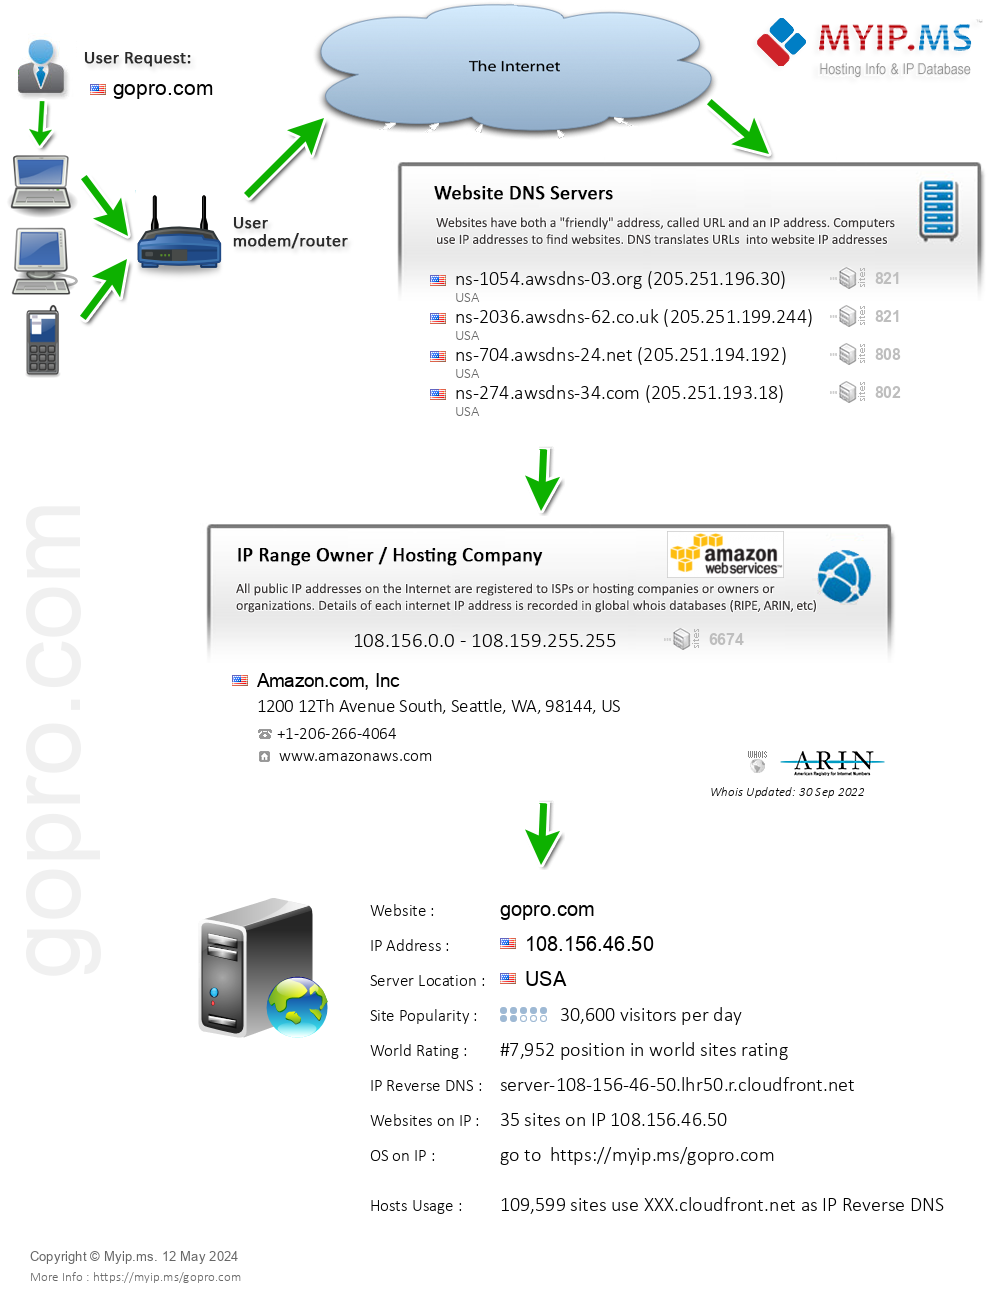 Gopro.com - Website Hosting Visual IP Diagram